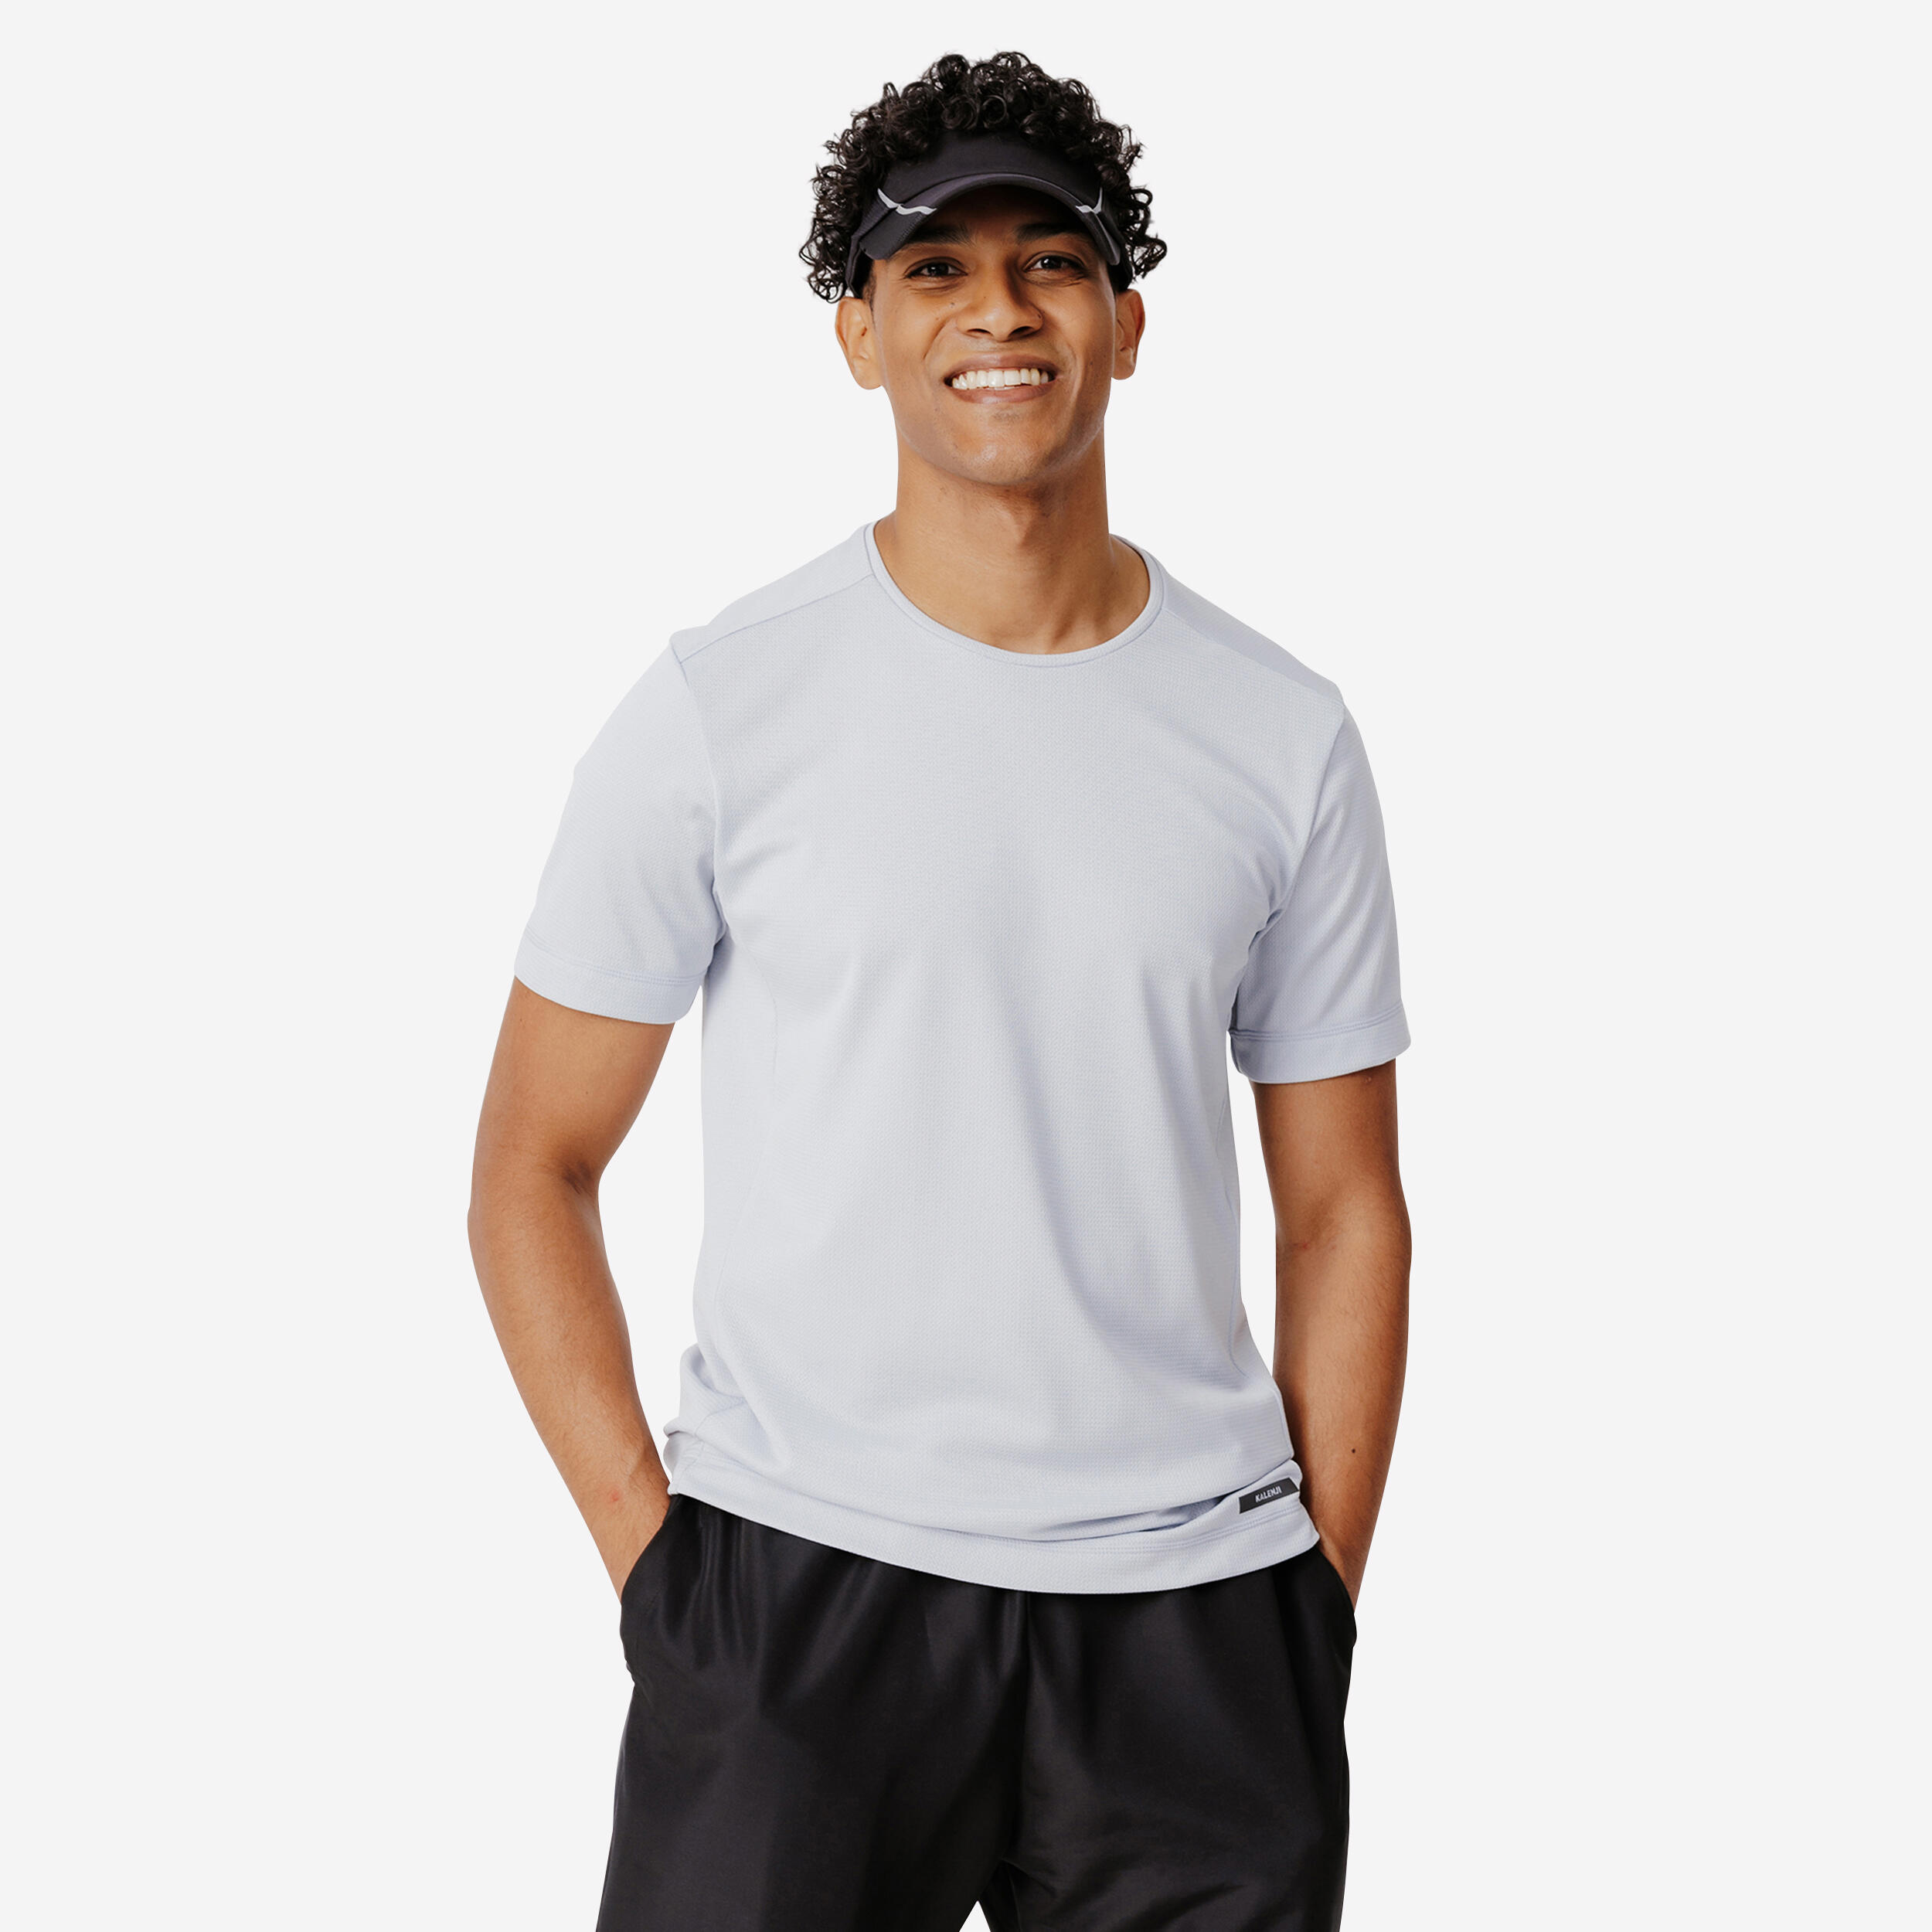 KIPRUN 100 Dry Men's Breathable Running T-shirt - Pearl grey